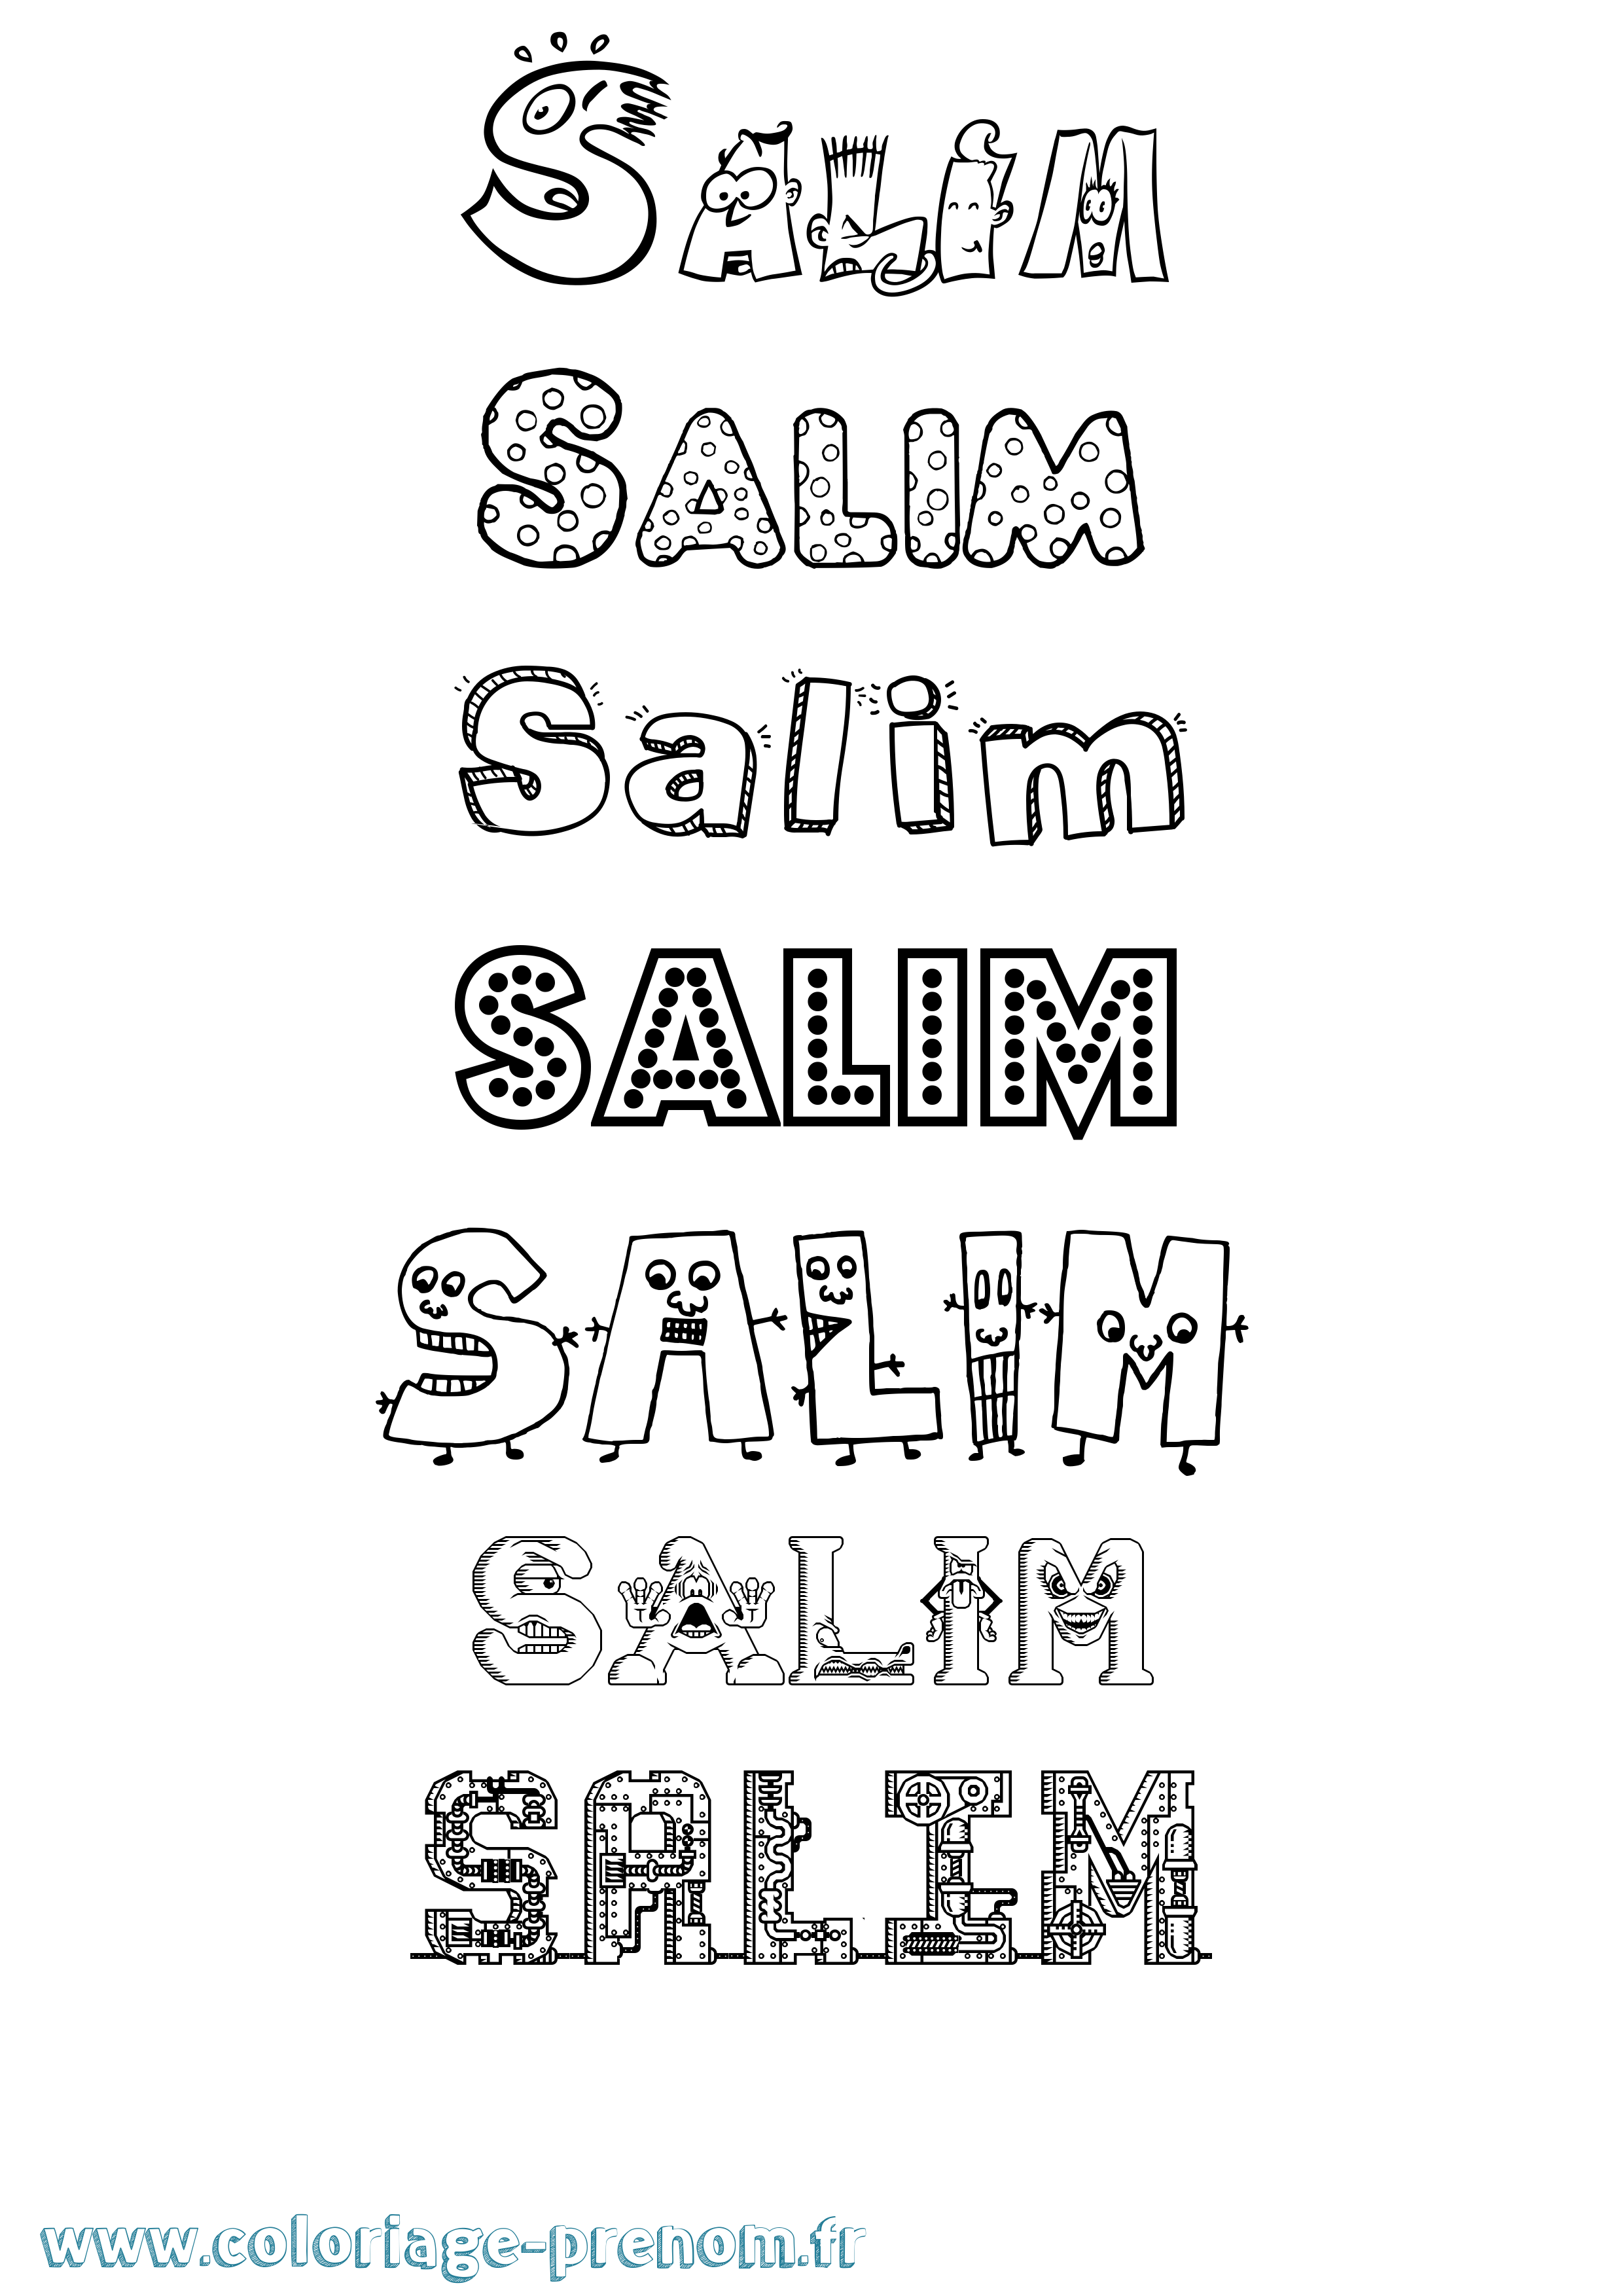 Coloriage prénom Salim